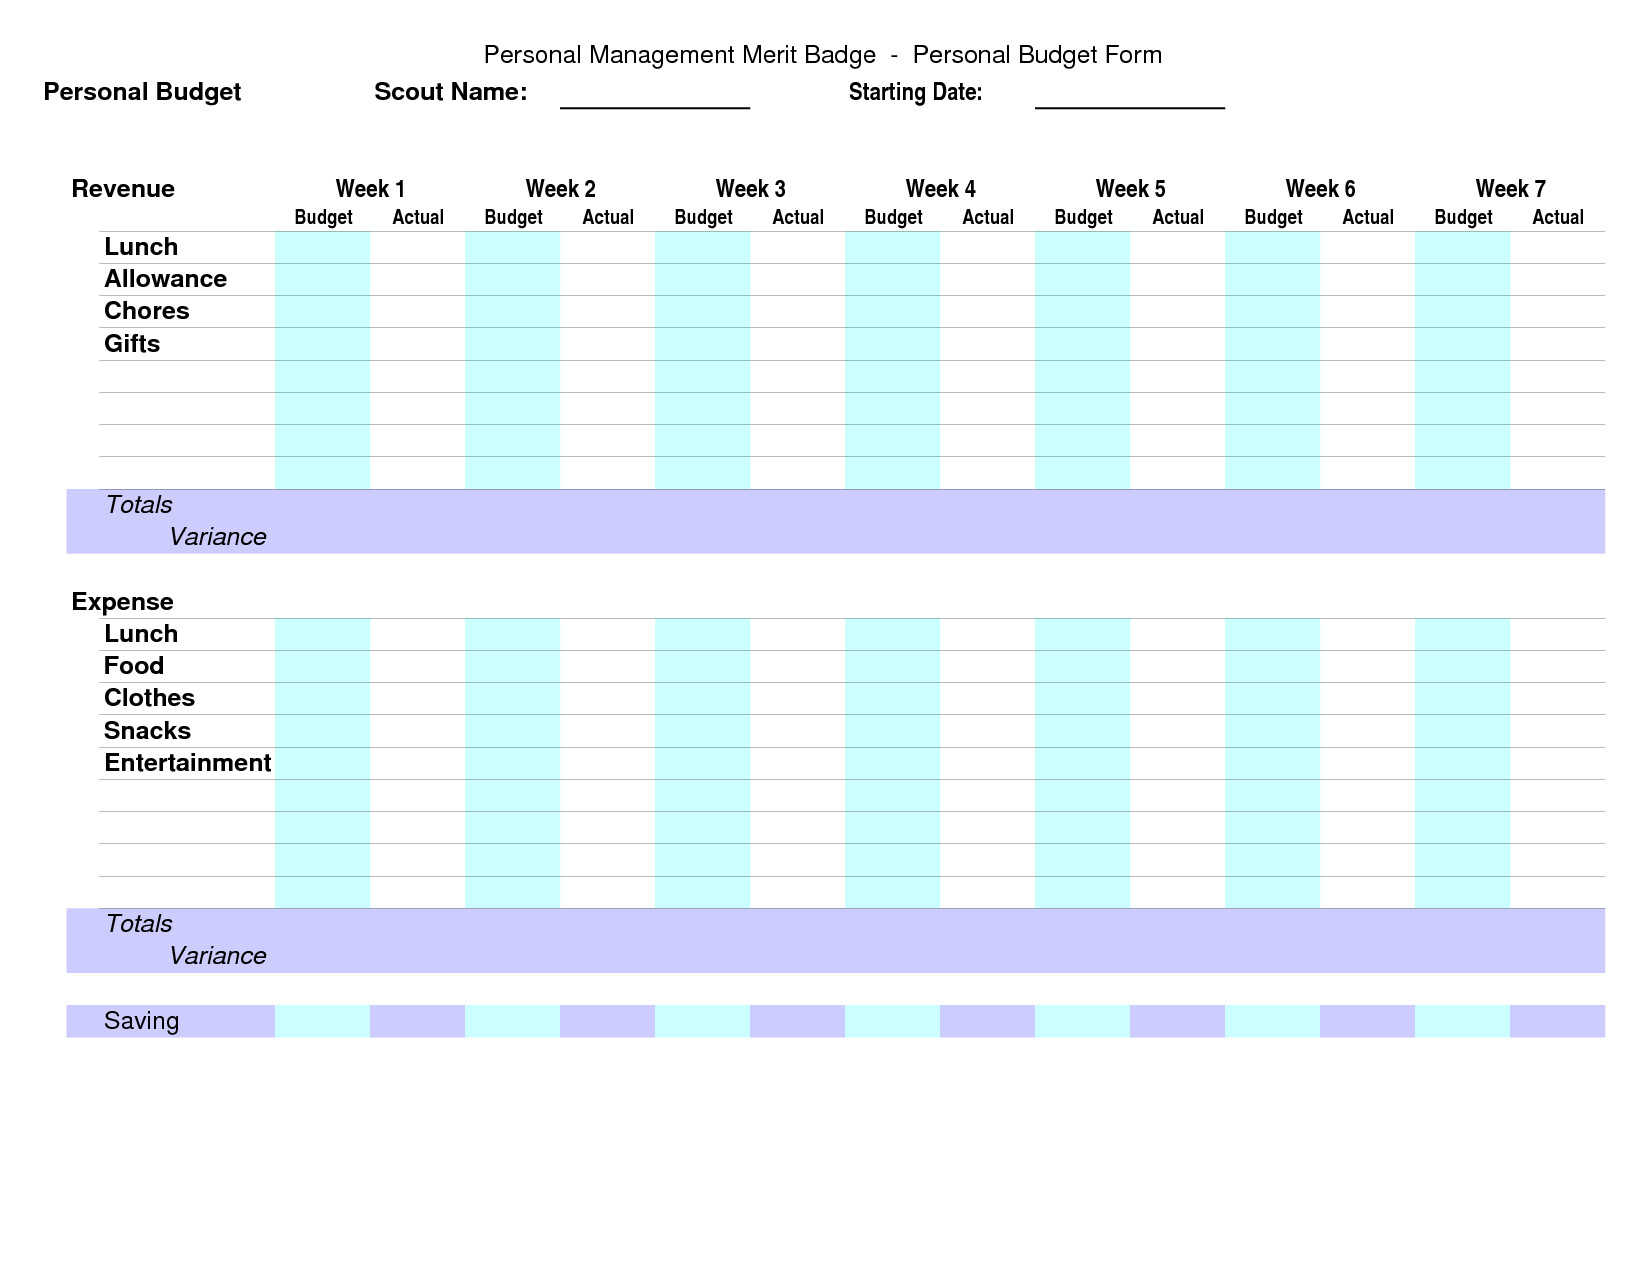 Personal Management Merit Badge Excel Spreadsheet Within Personal Management Merit Badge Excel Spreadsheet  My Spreadsheet